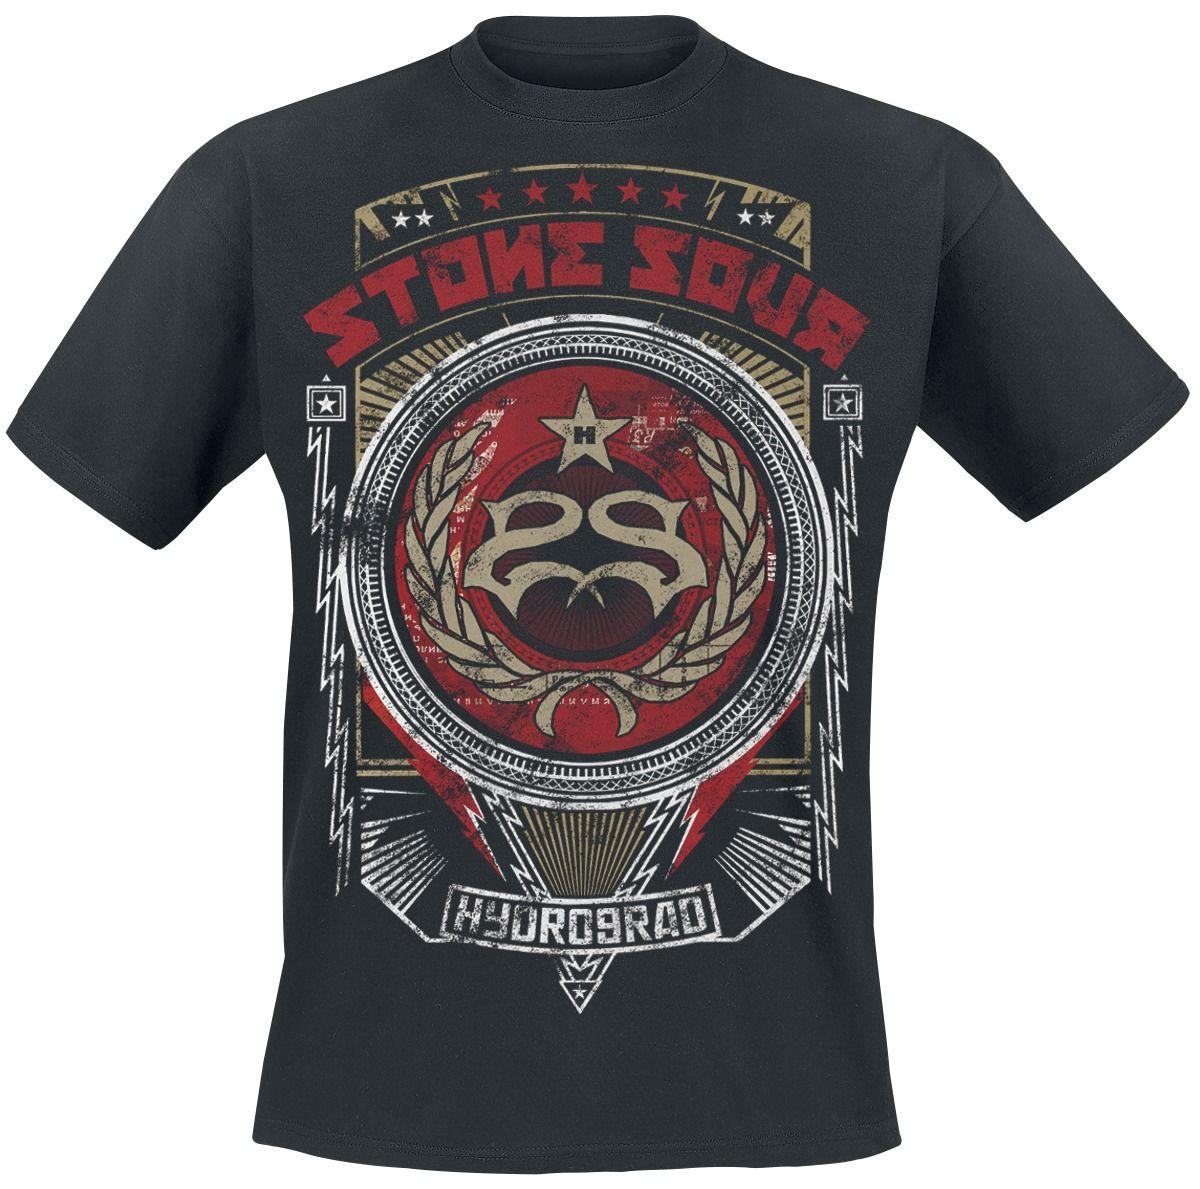 Stone Sour Logo - Hydrograd. Stone Sour T Shirt